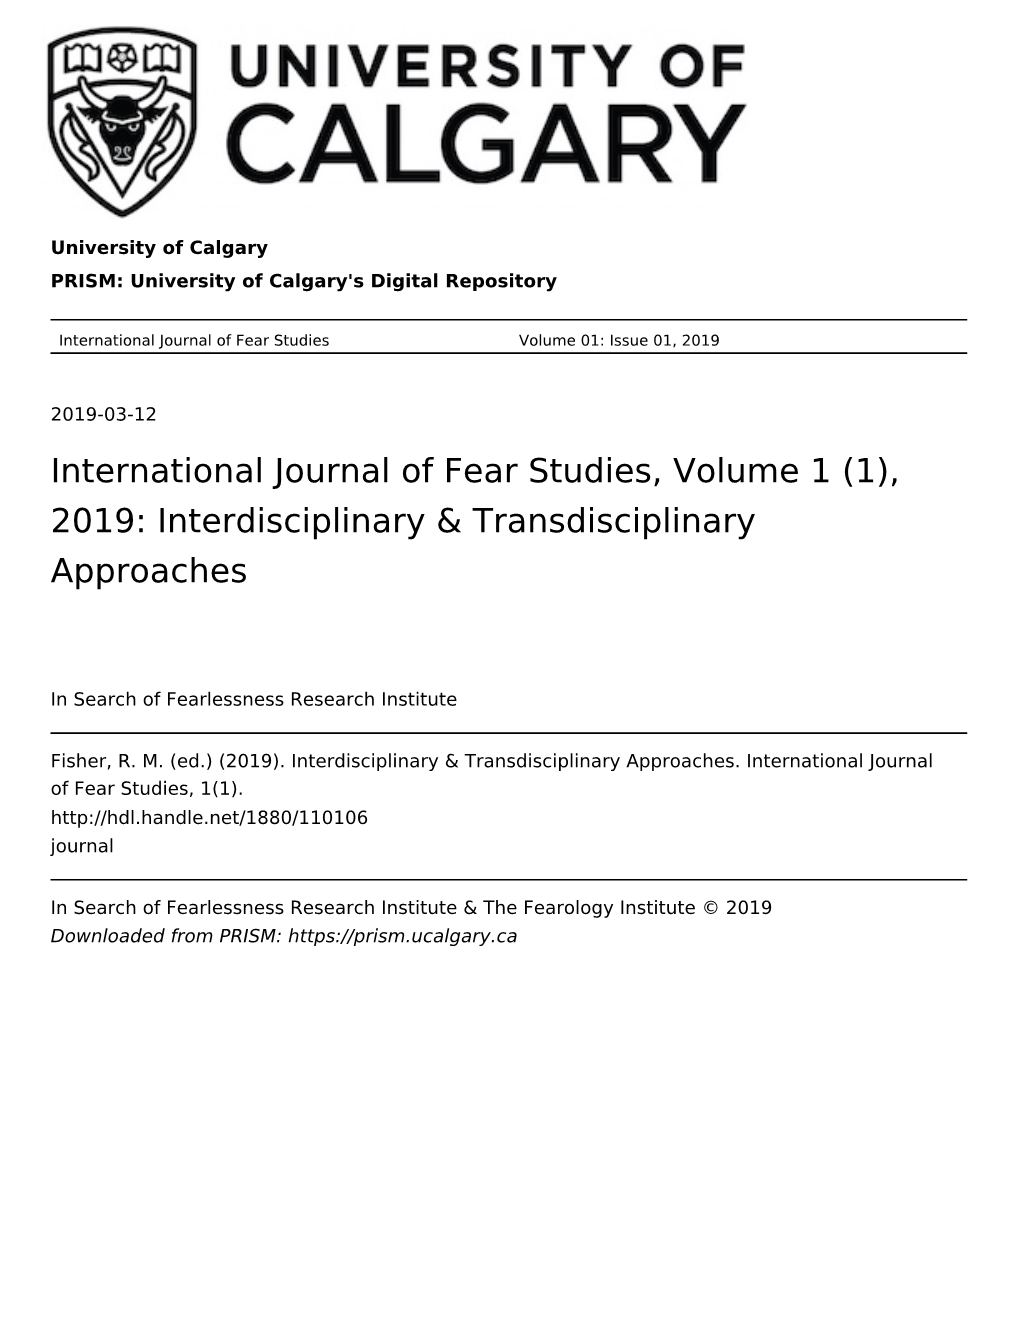 International Journal of Fear Studies Volume 01: Issue 01, 2019